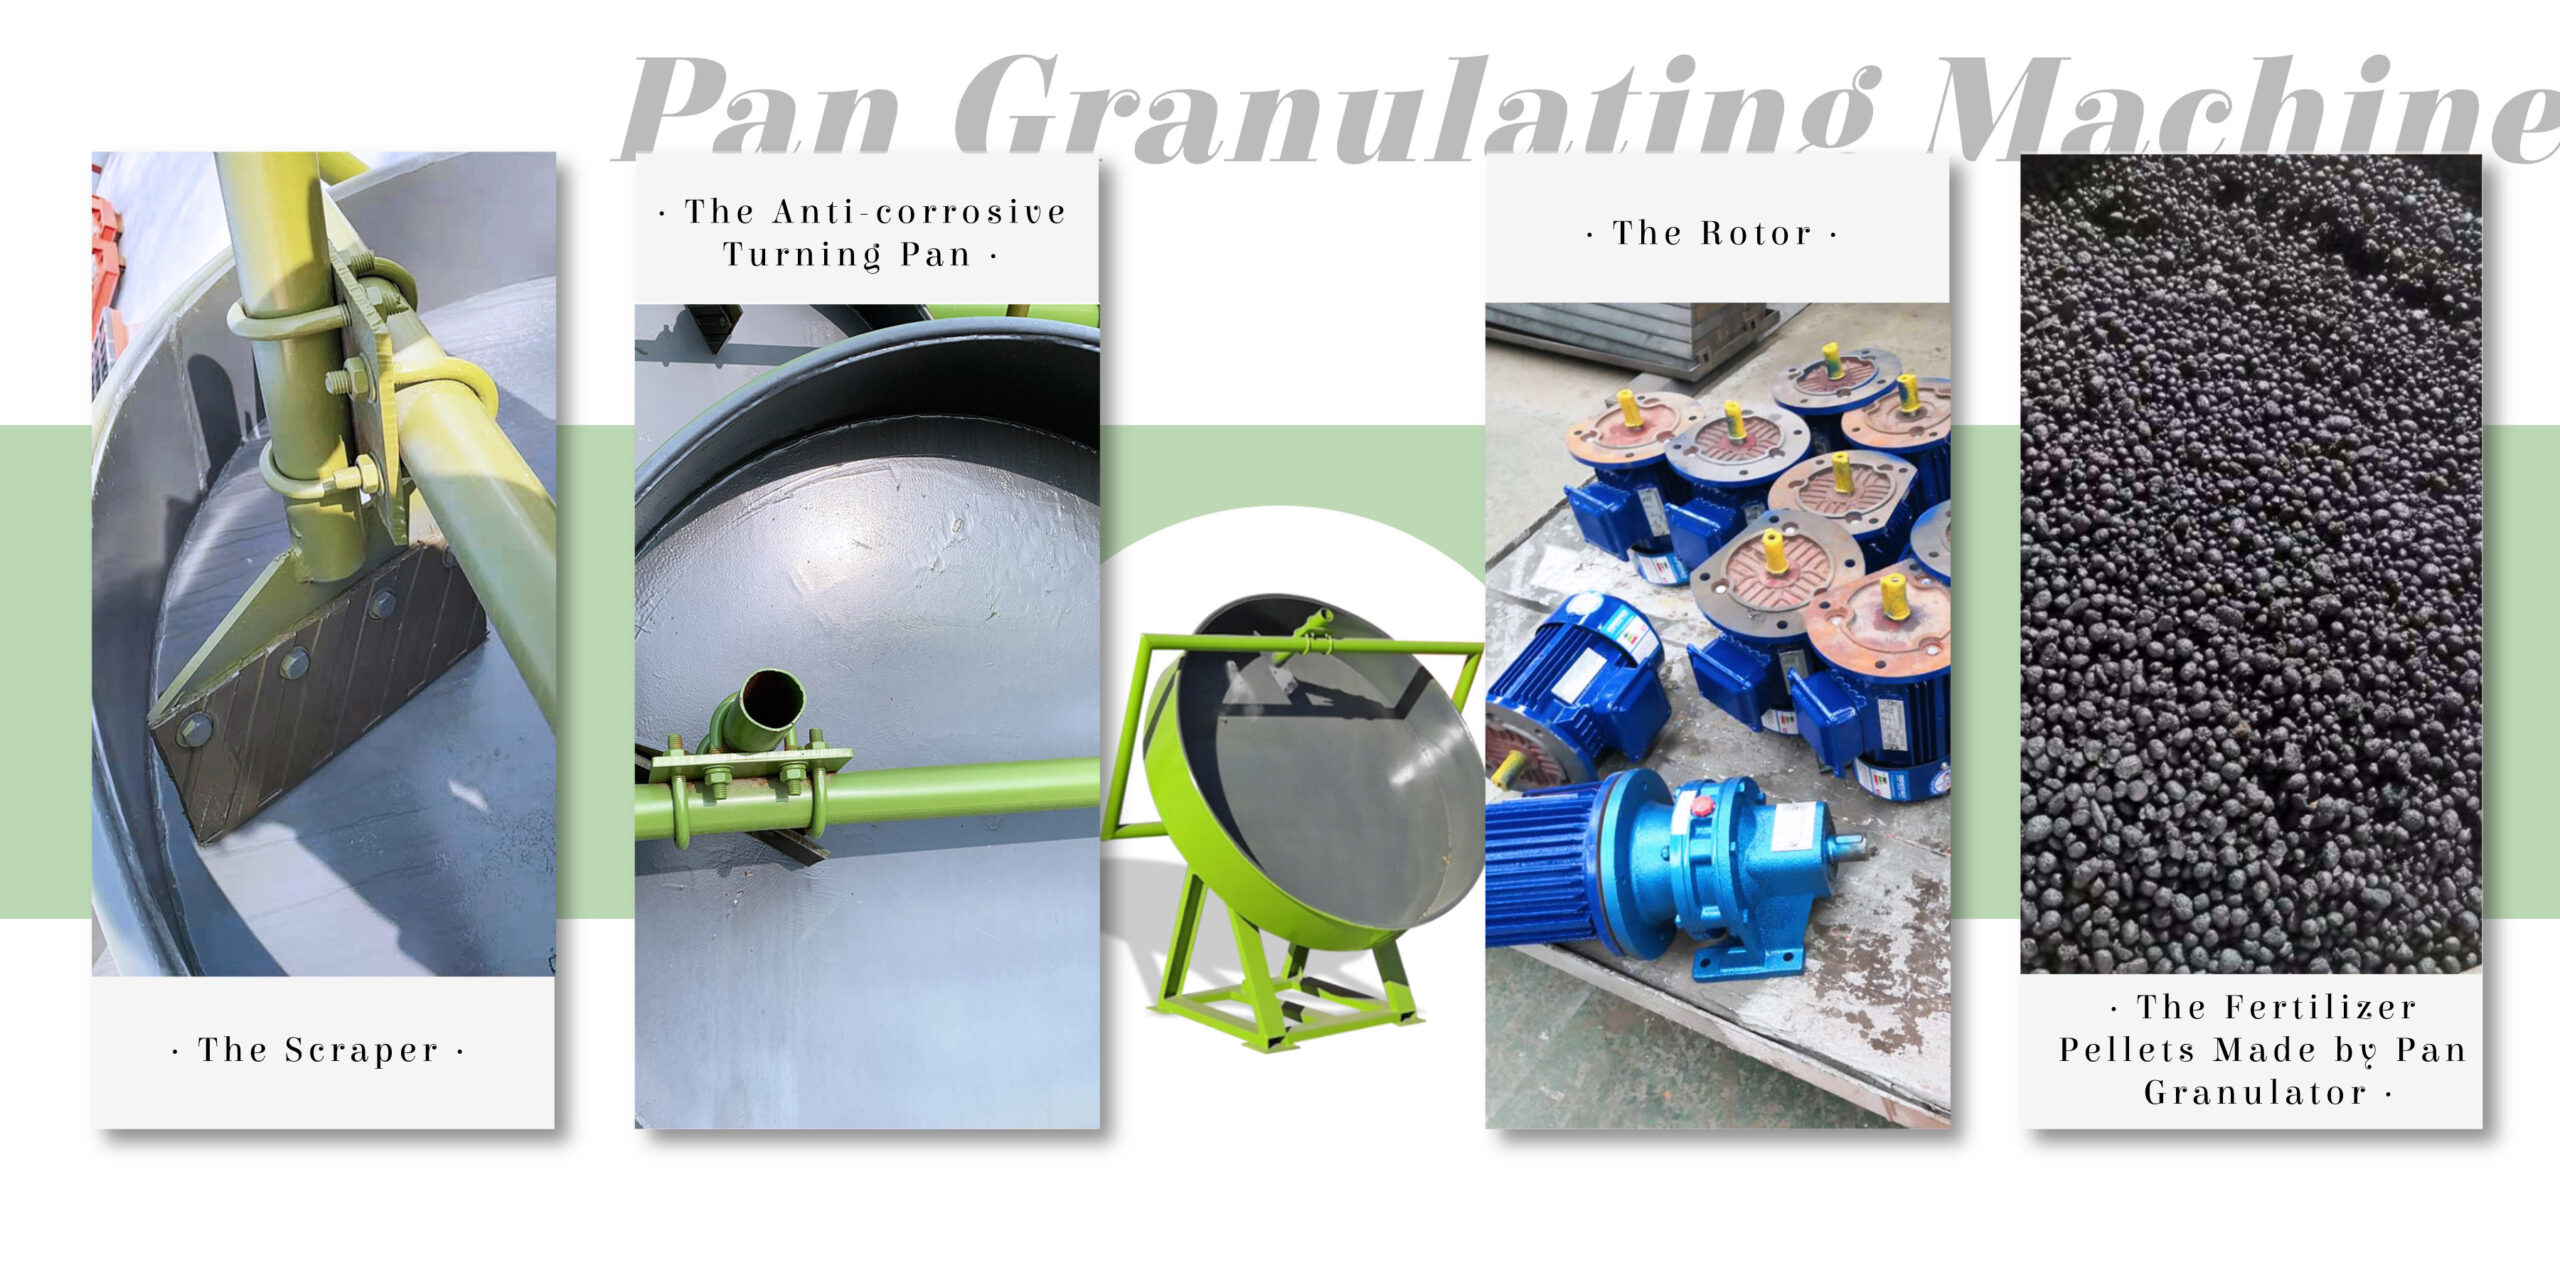 The Details of Pan Granulating Machine